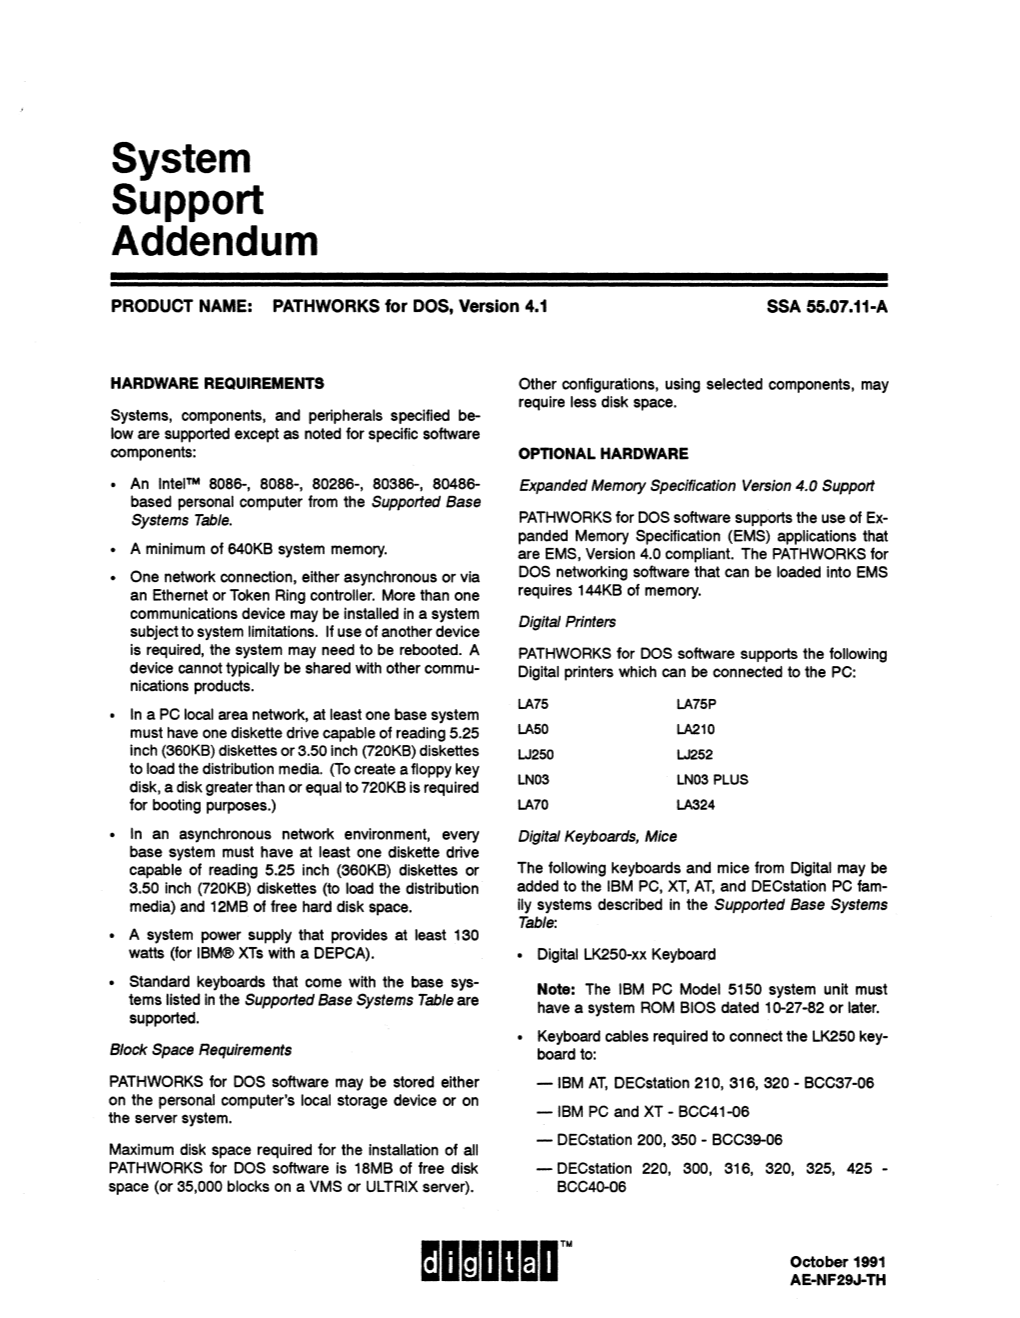 System Support Addendum